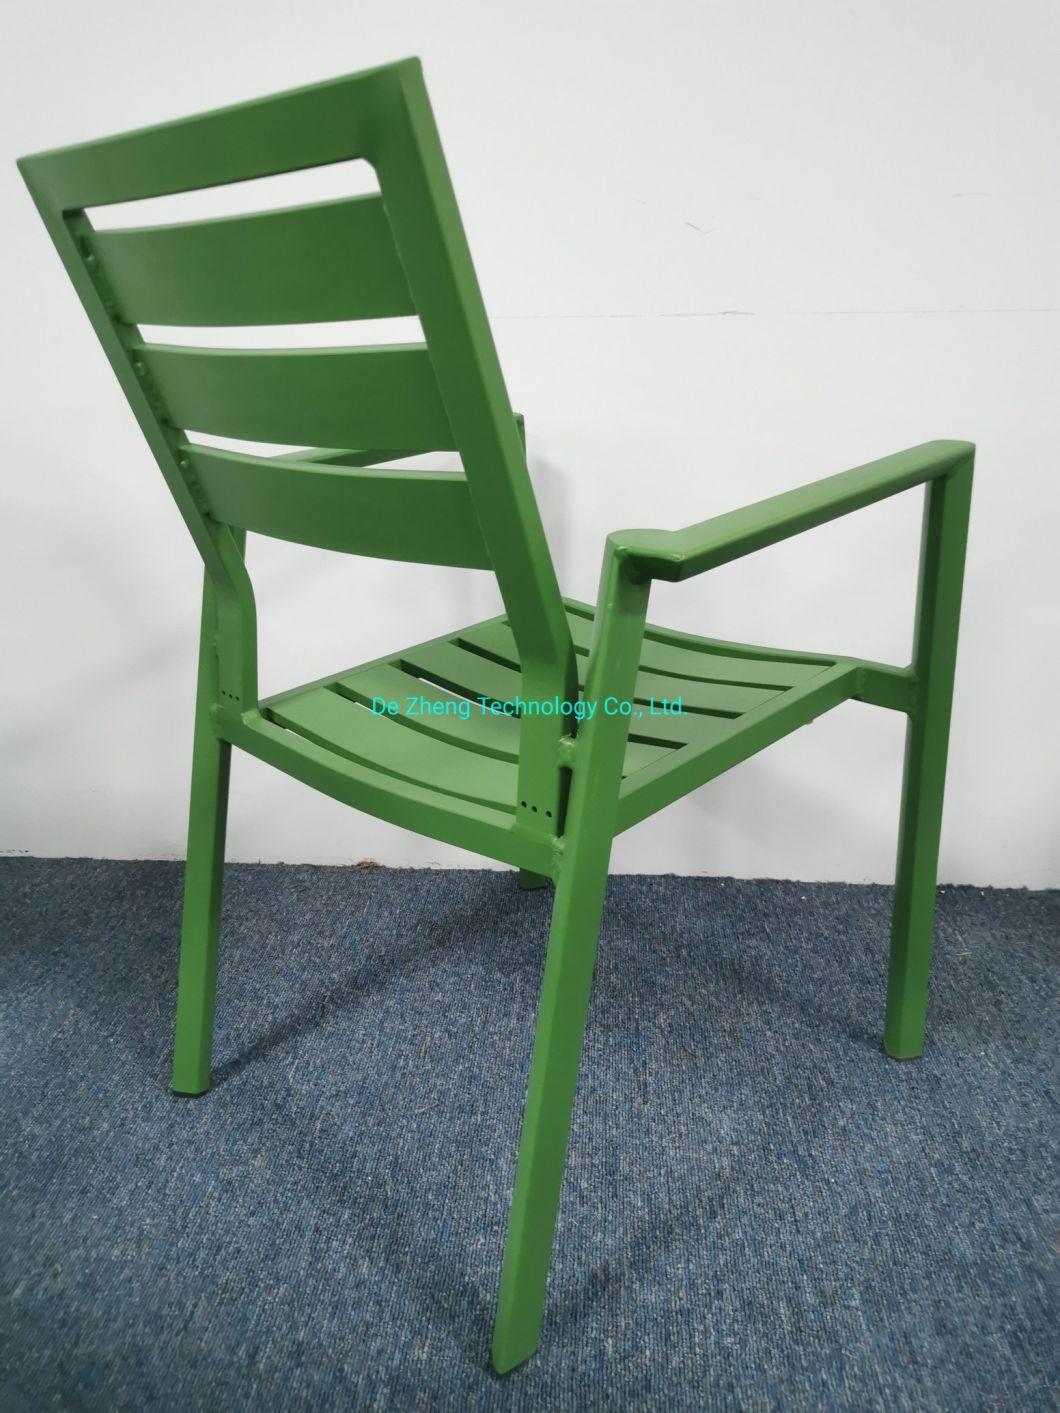 Luxury Modern Colorful Aluminum Outdoor Chairs Garden Aluminum Slats Outdoor Furniture Set